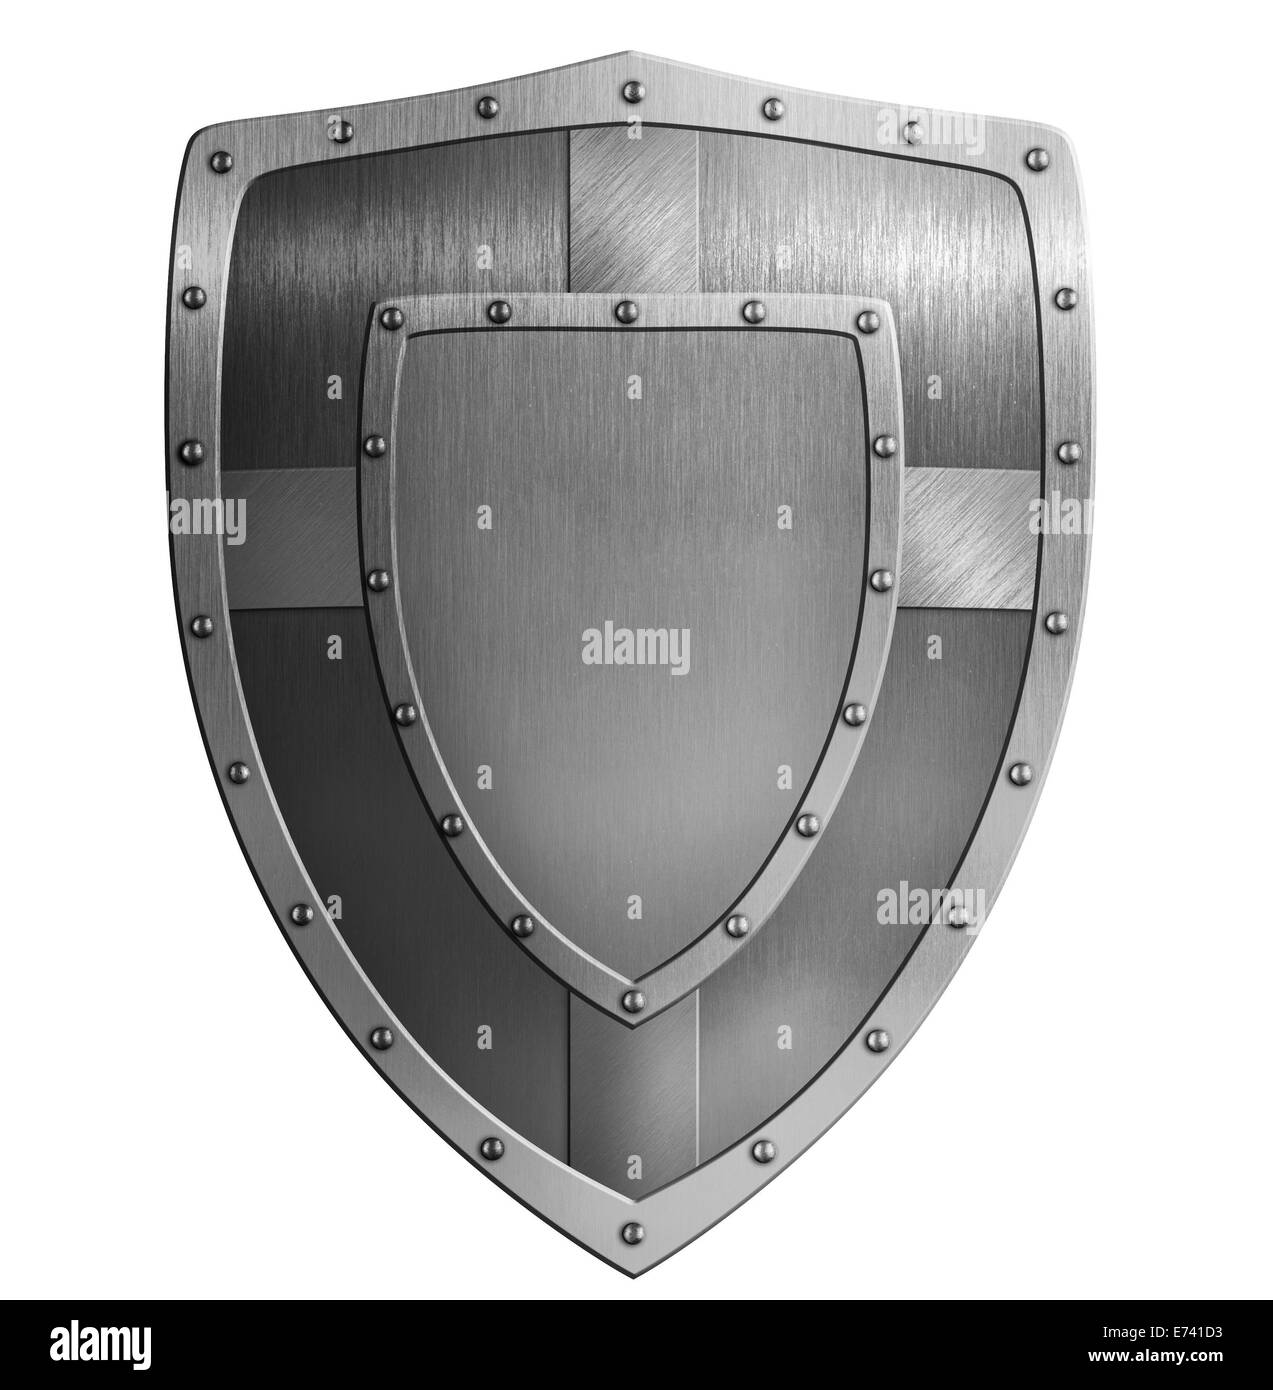 metal shield illustration Stock Photo - Alamy